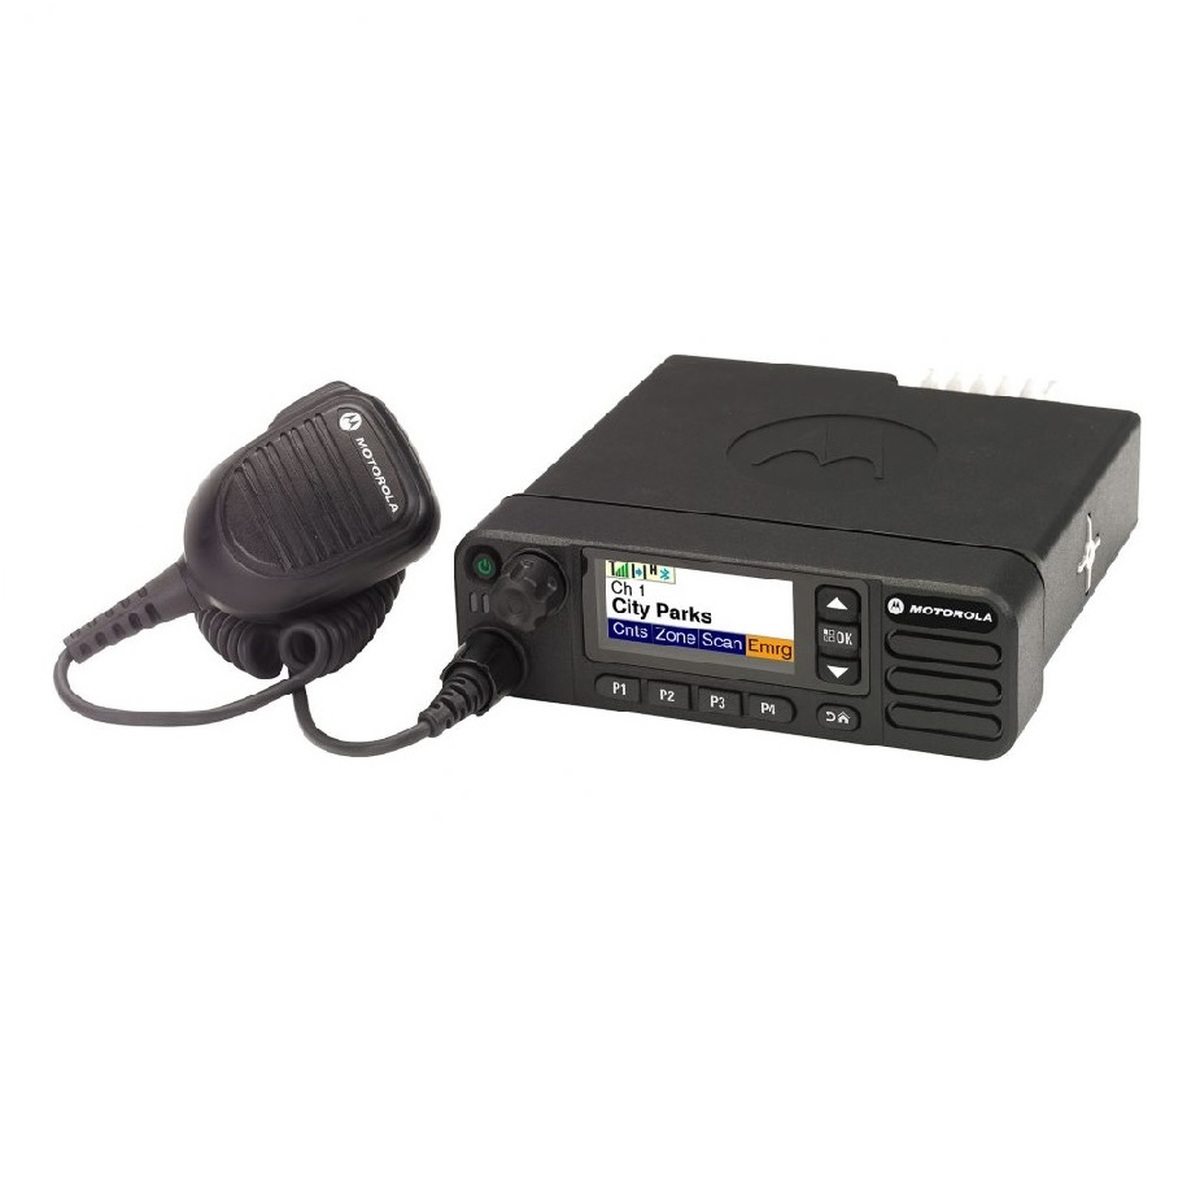 Radio Motorola DGM5500e Digital LAM28QNN9SA1AN UHF 403-470 MHZ de 25W